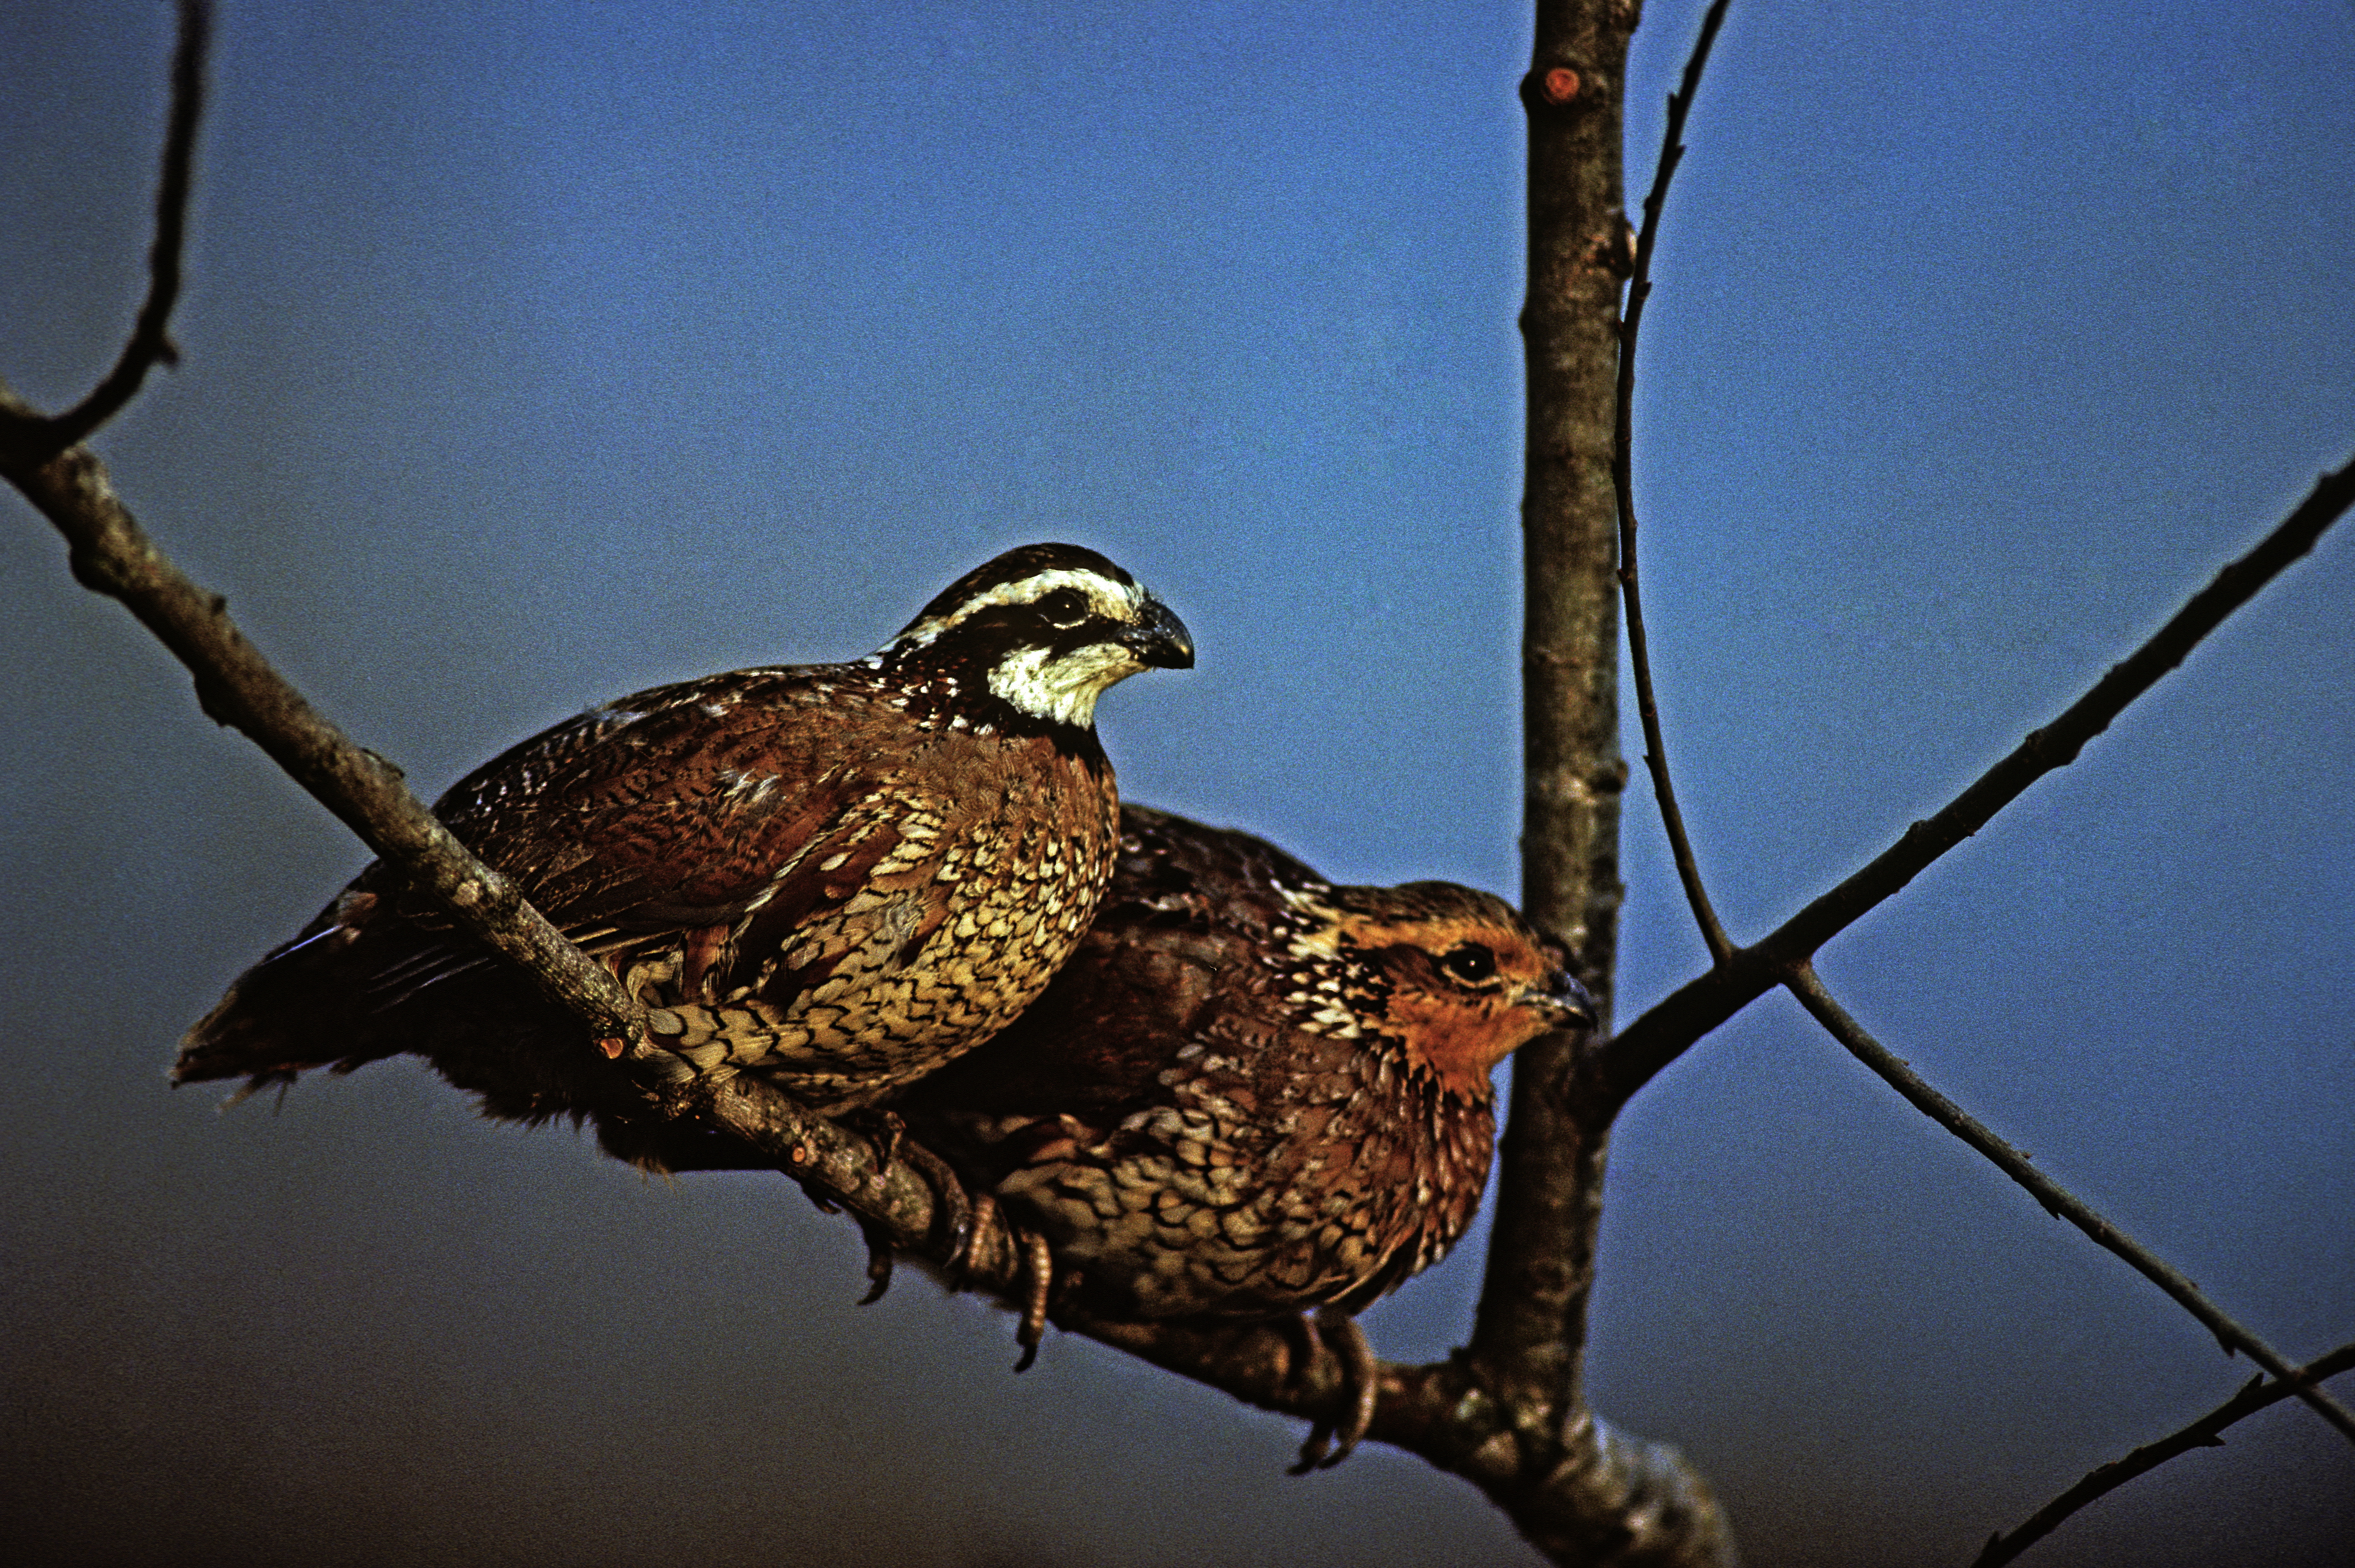 Pair of bobwhite quail on a branch